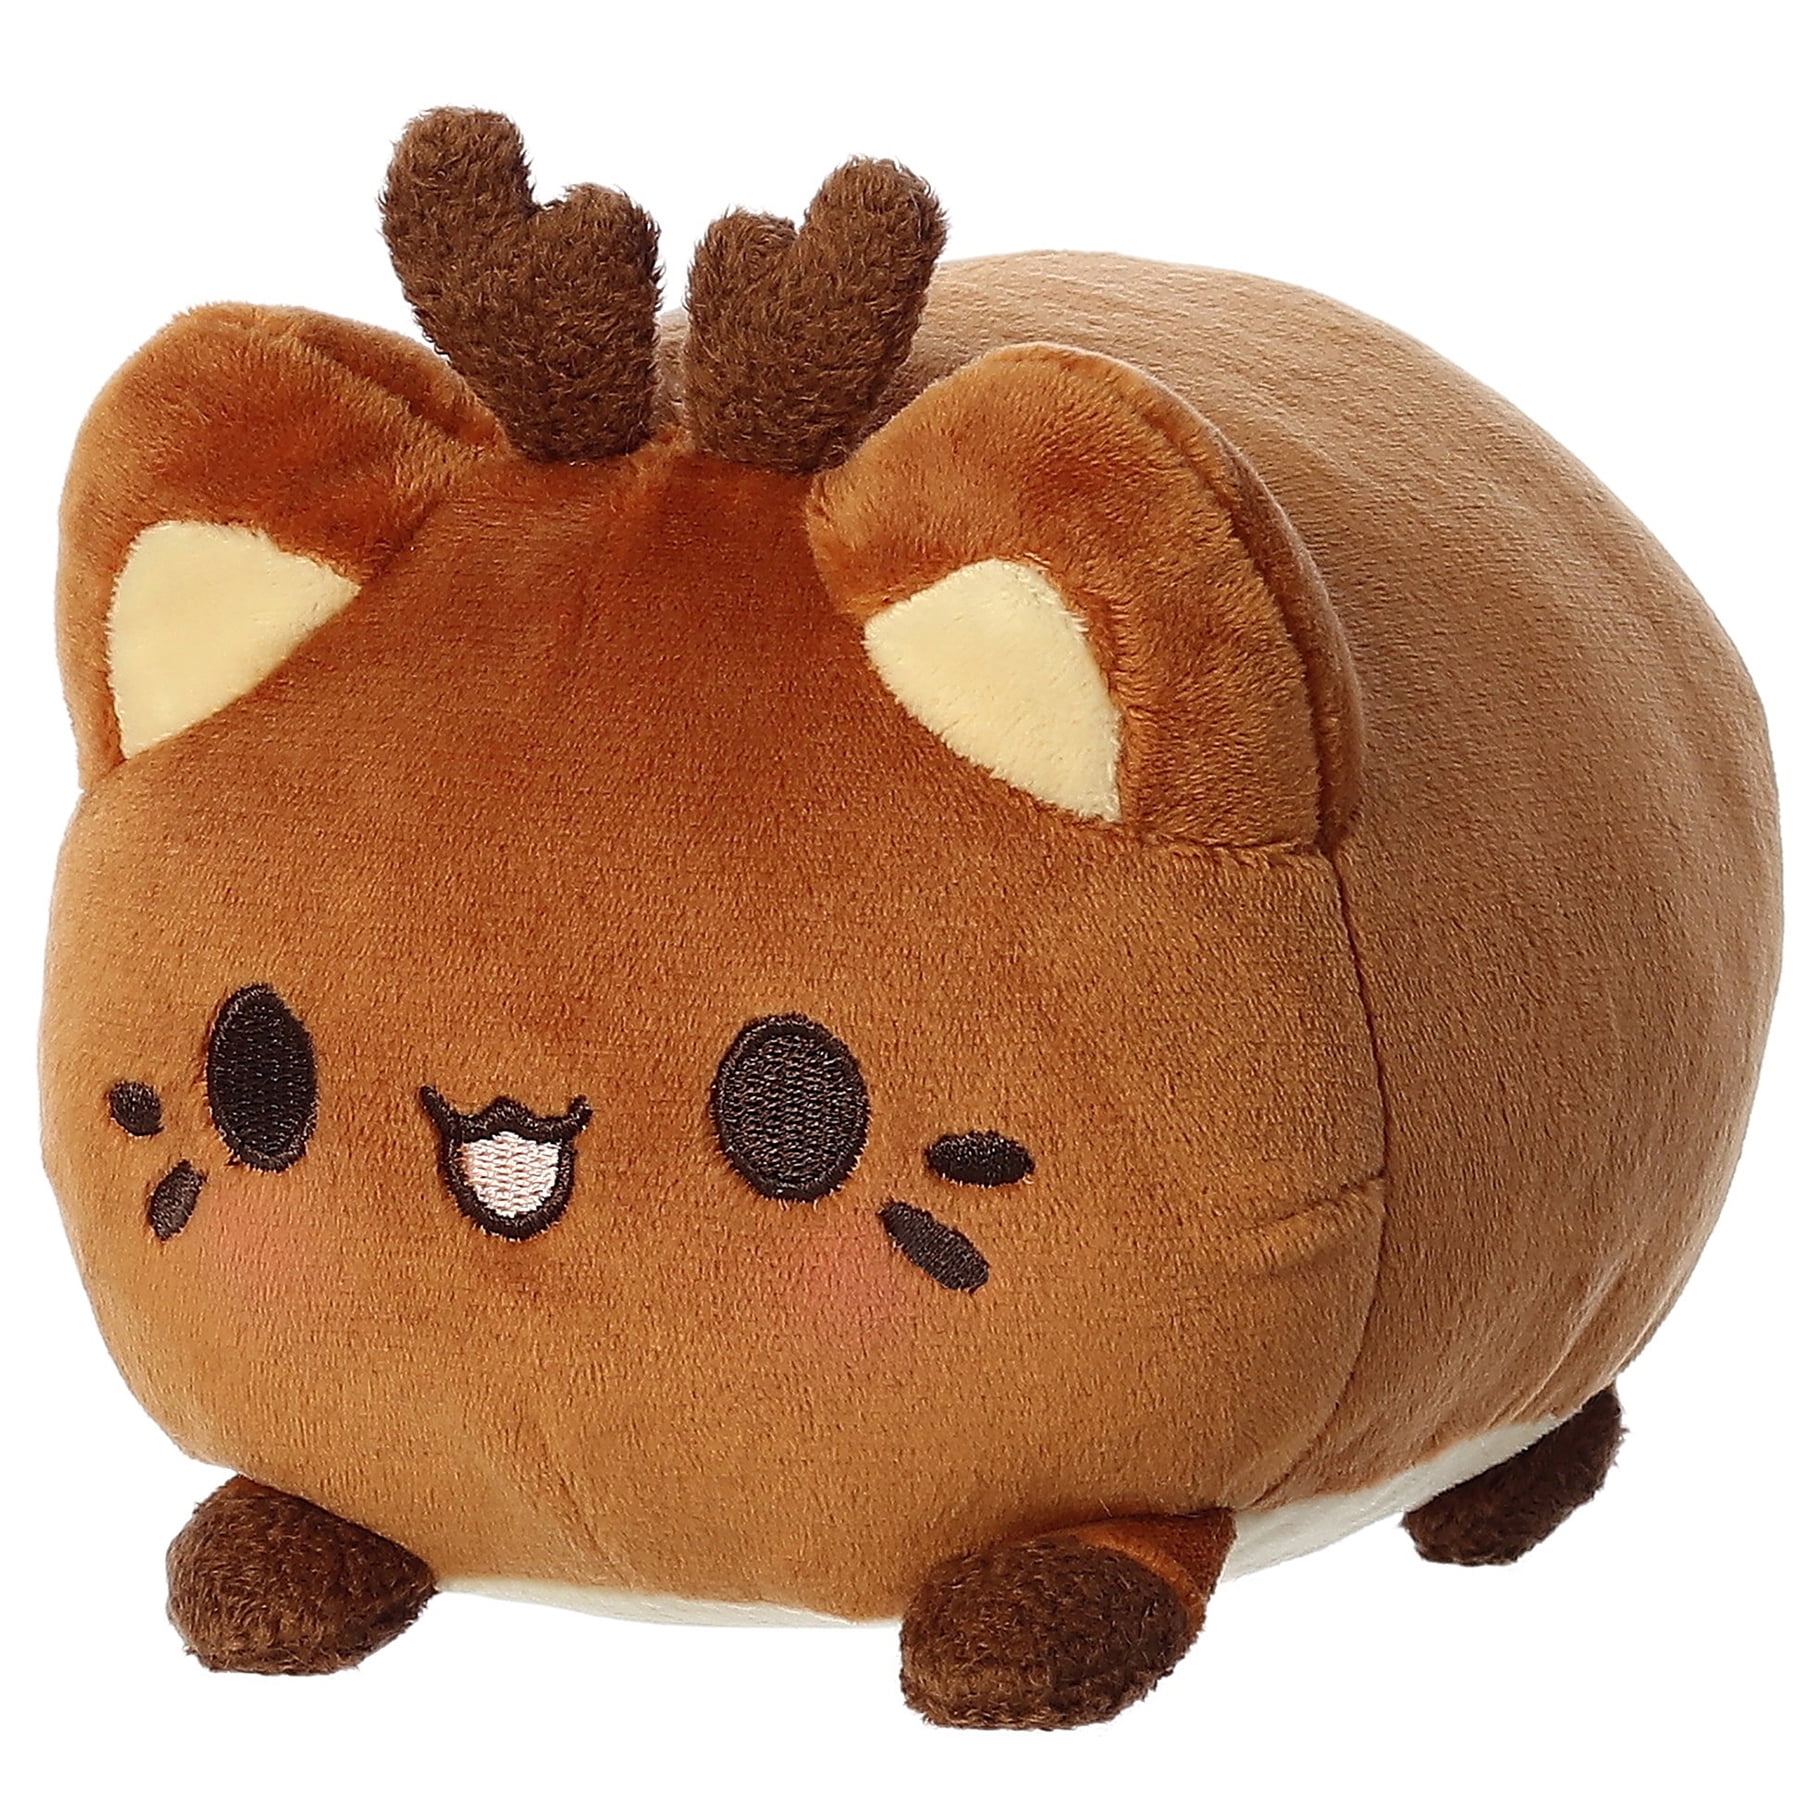 TheMogan 8" Siamese Cat Kitten Pet Soft Plush Stuffed Animal Toy Brown & Beige 